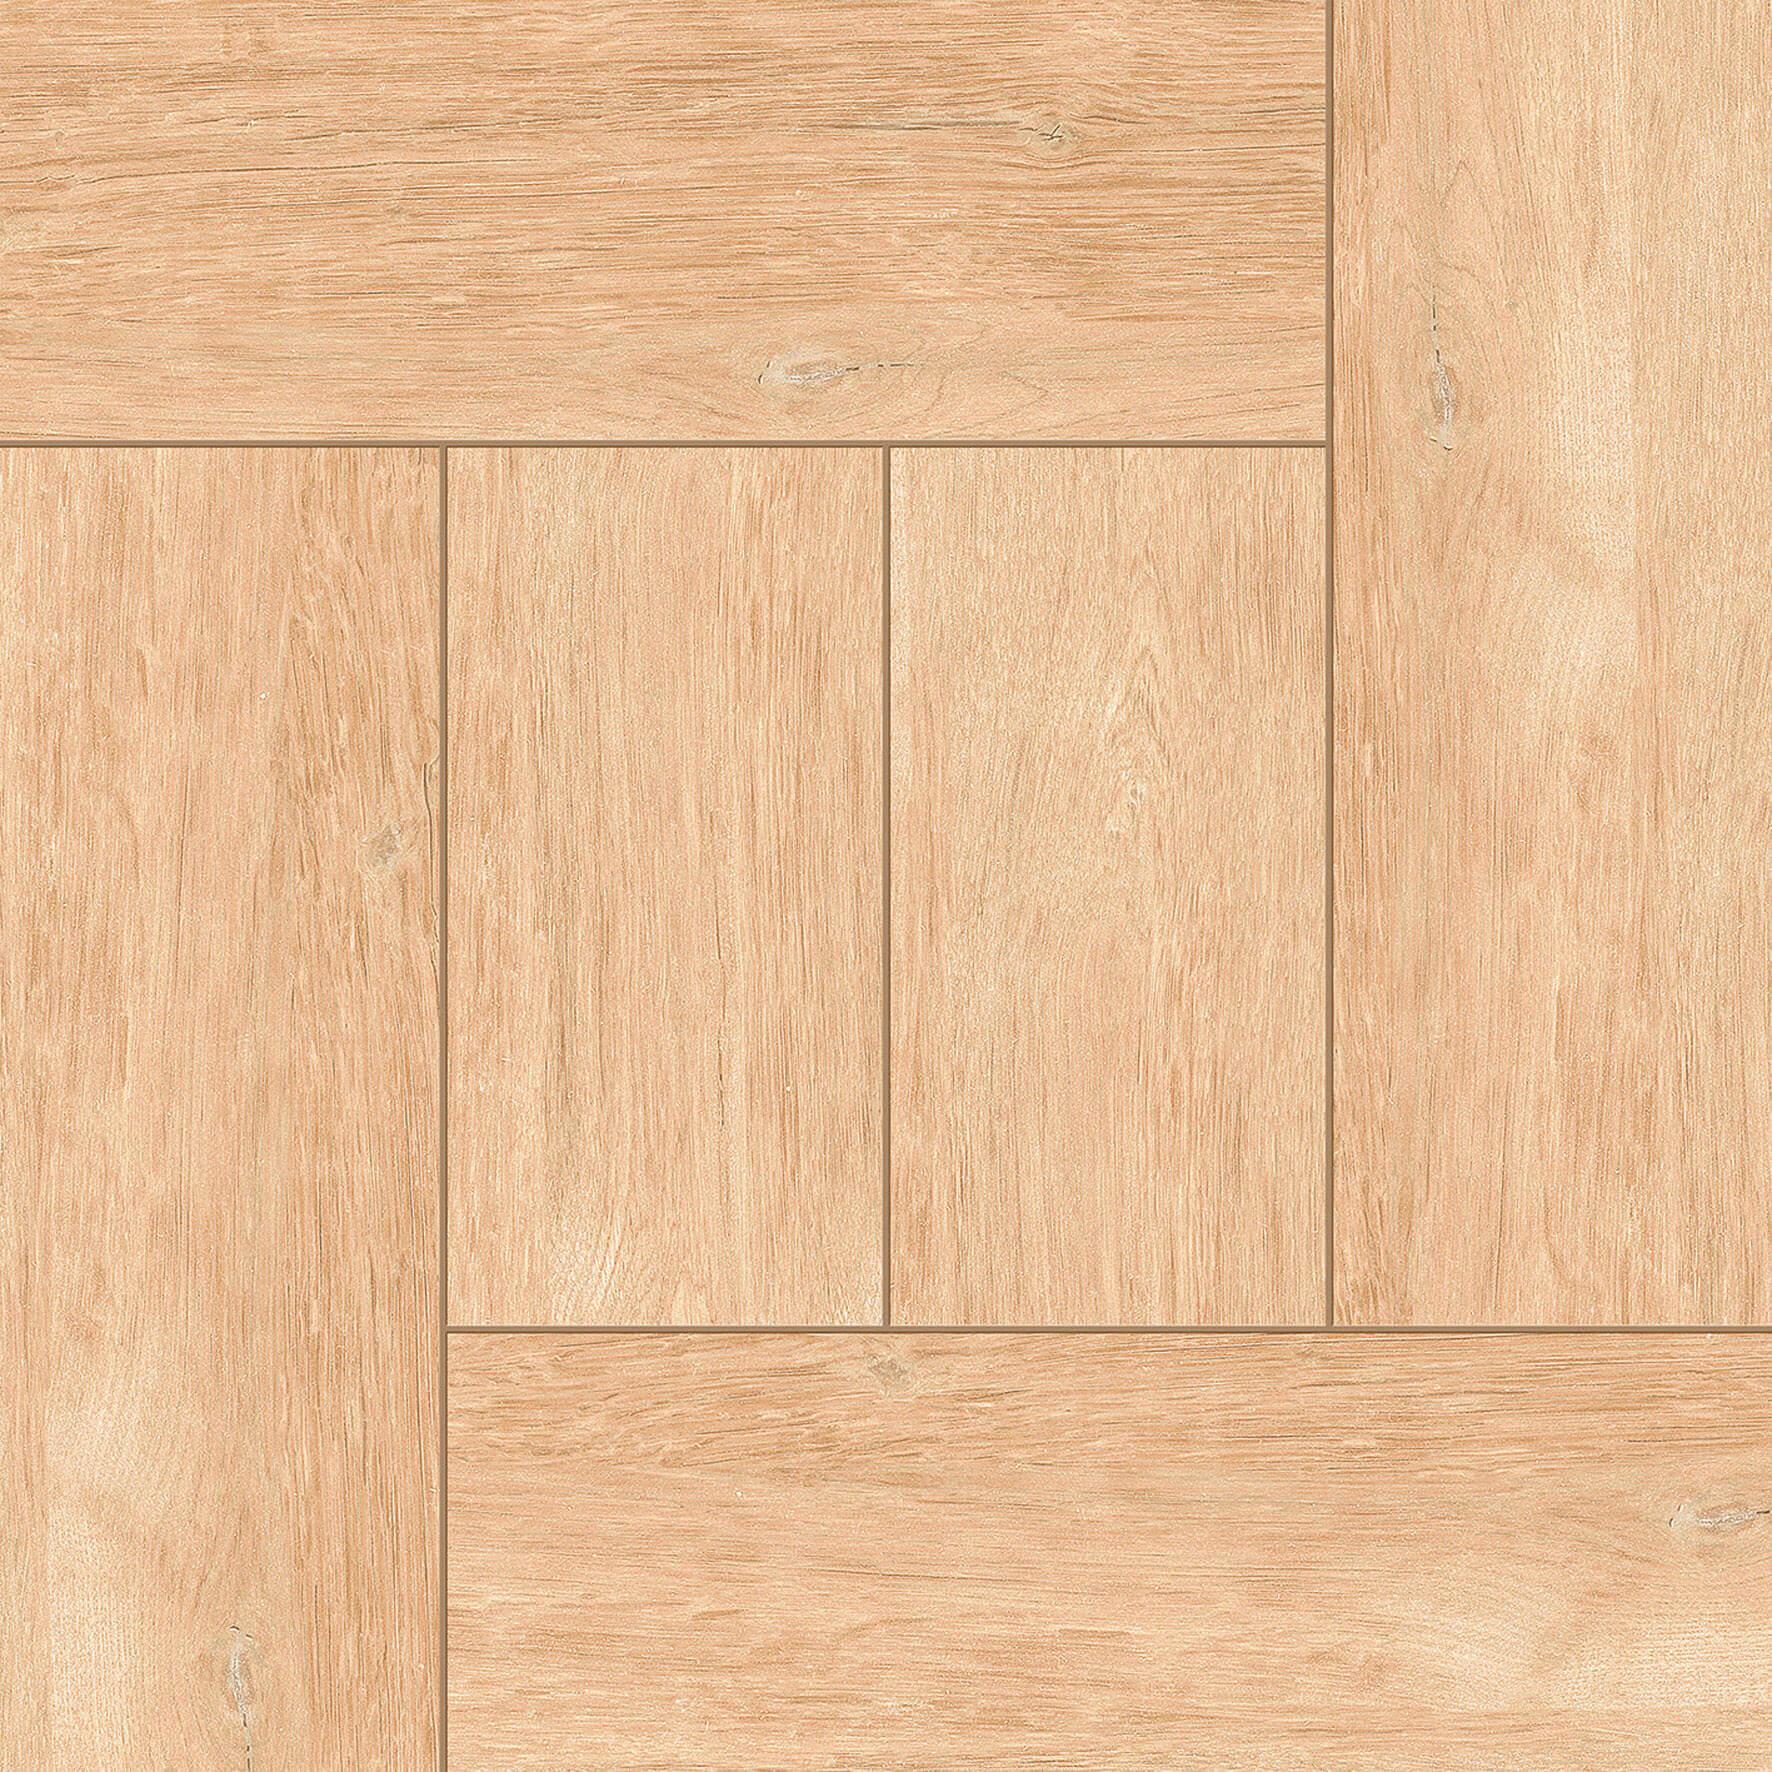 Wooden Tiles for Living Room Tiles, Bedroom Tiles, Balcony Tiles, Accent Tiles, Terrace Tiles, Hospital Tiles, Automotive Tiles, High Traffic Tiles, Bar/Restaurant, Commercial/Office, Outdoor/Terrace